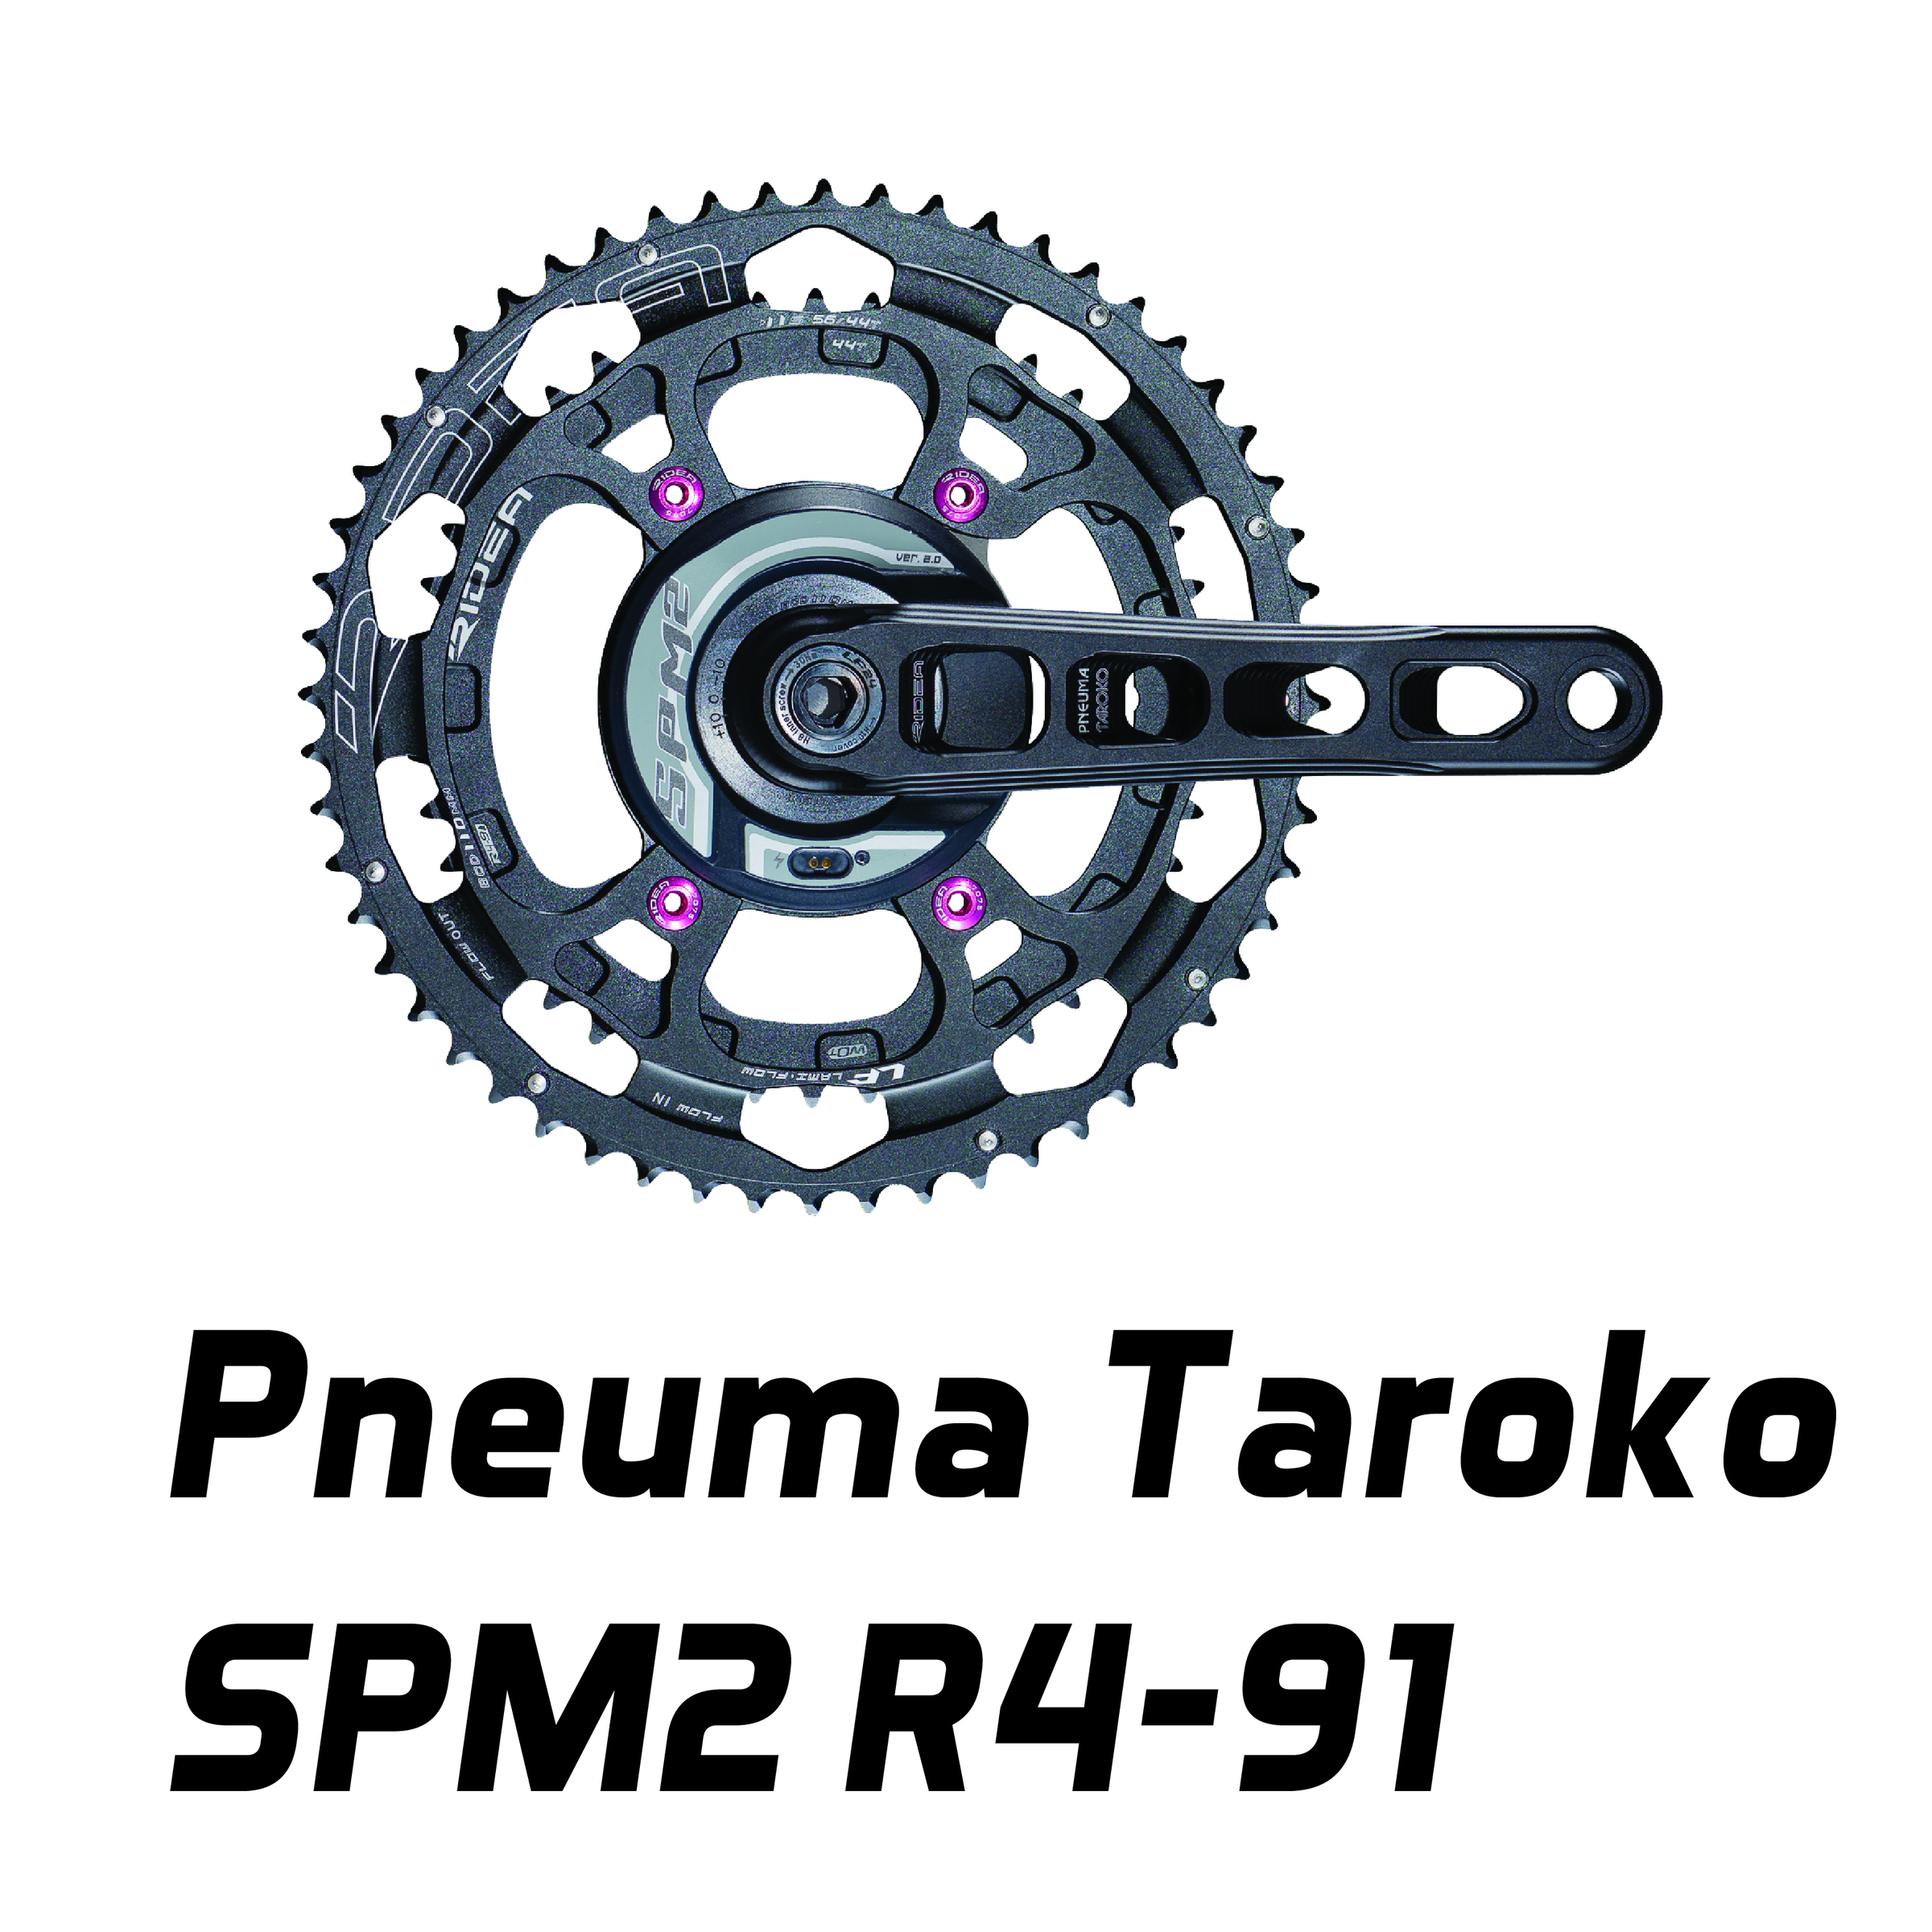 Pneuma Taroko SPM2 R4-91 BB24 Crank(Chain ring purchase separately